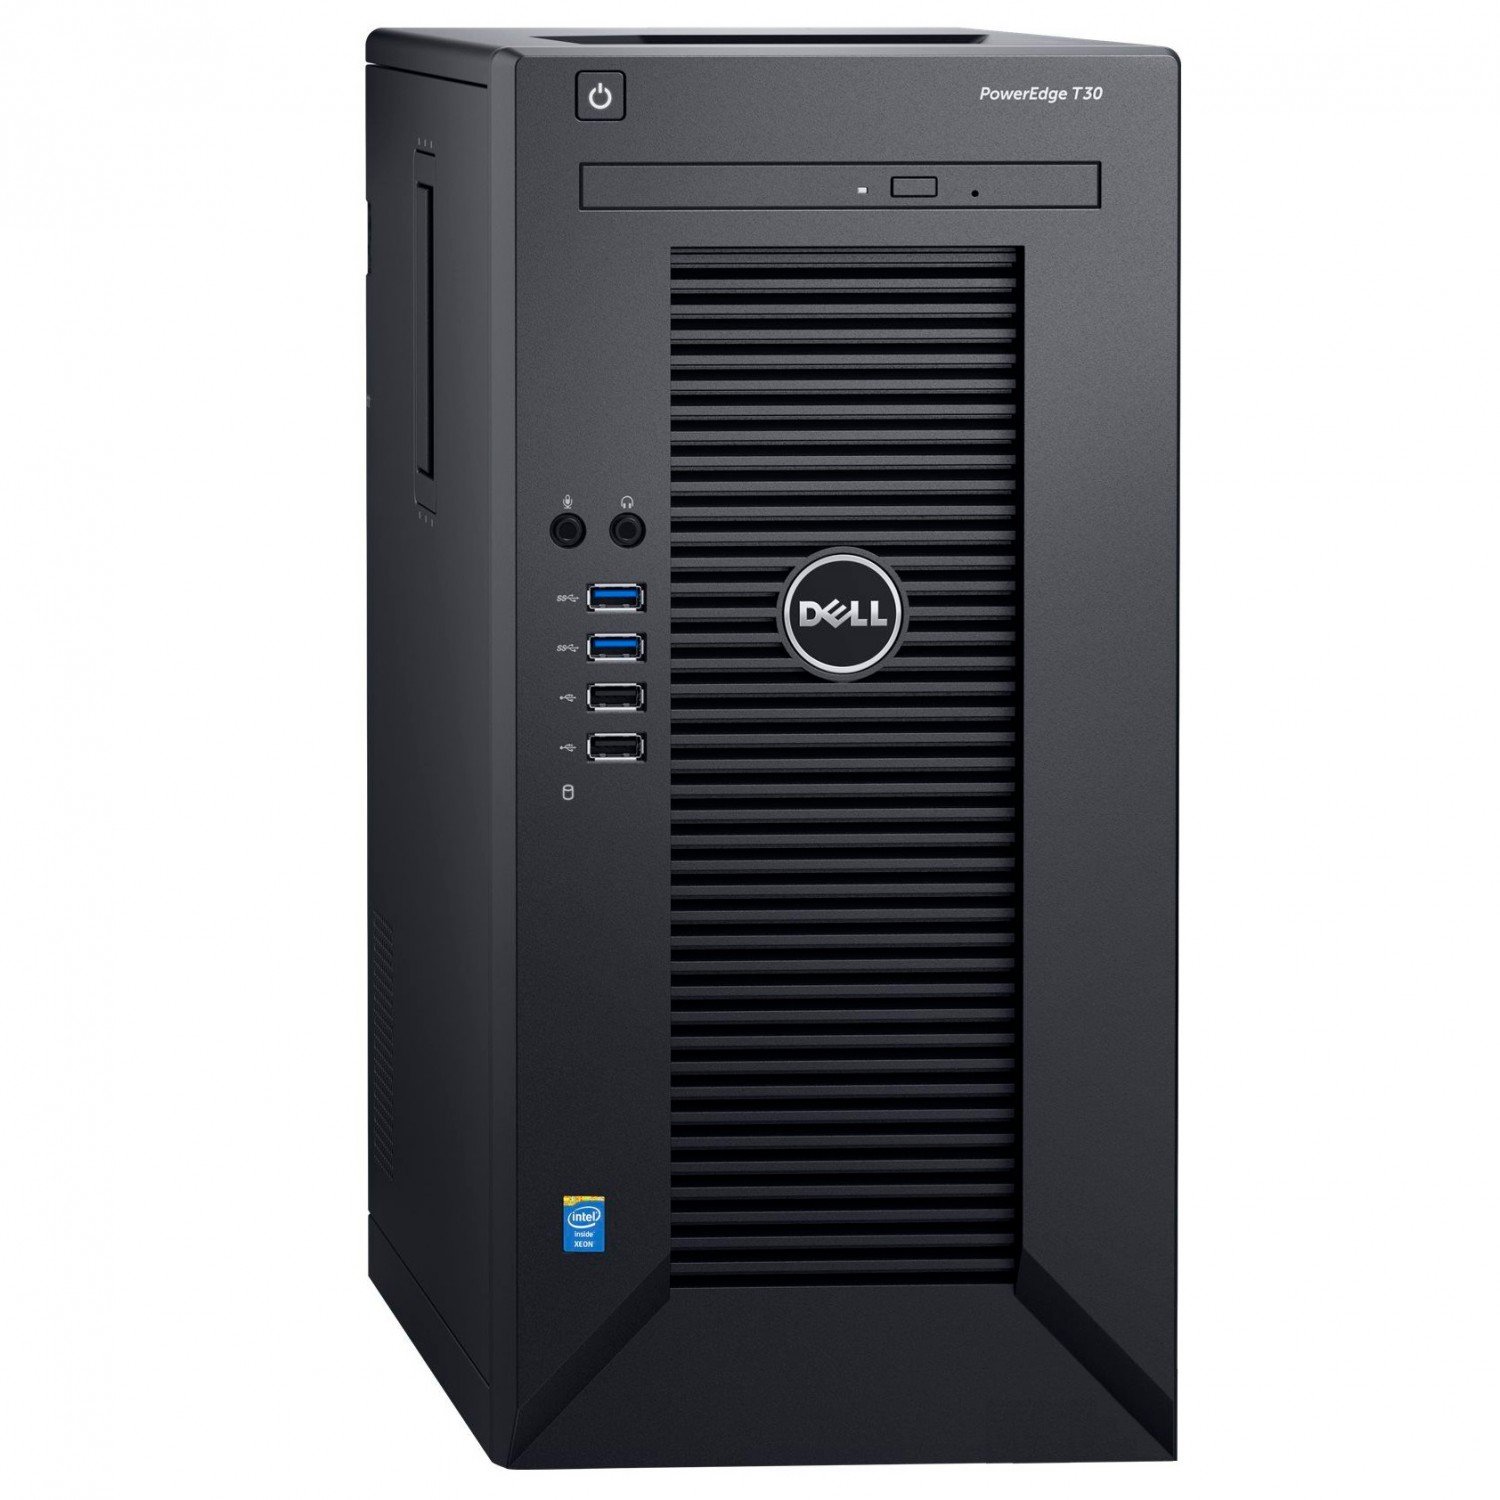 Сервер Dell PowerEdge T30, Intel Xeon E3-1225v5 (3.3GHz,4C), 8GB UDIMM, 1TB SATA 7.2K 3.5" Cabled, DVD+/-RW, PSU 290W, Tower, 210-AKHI/001